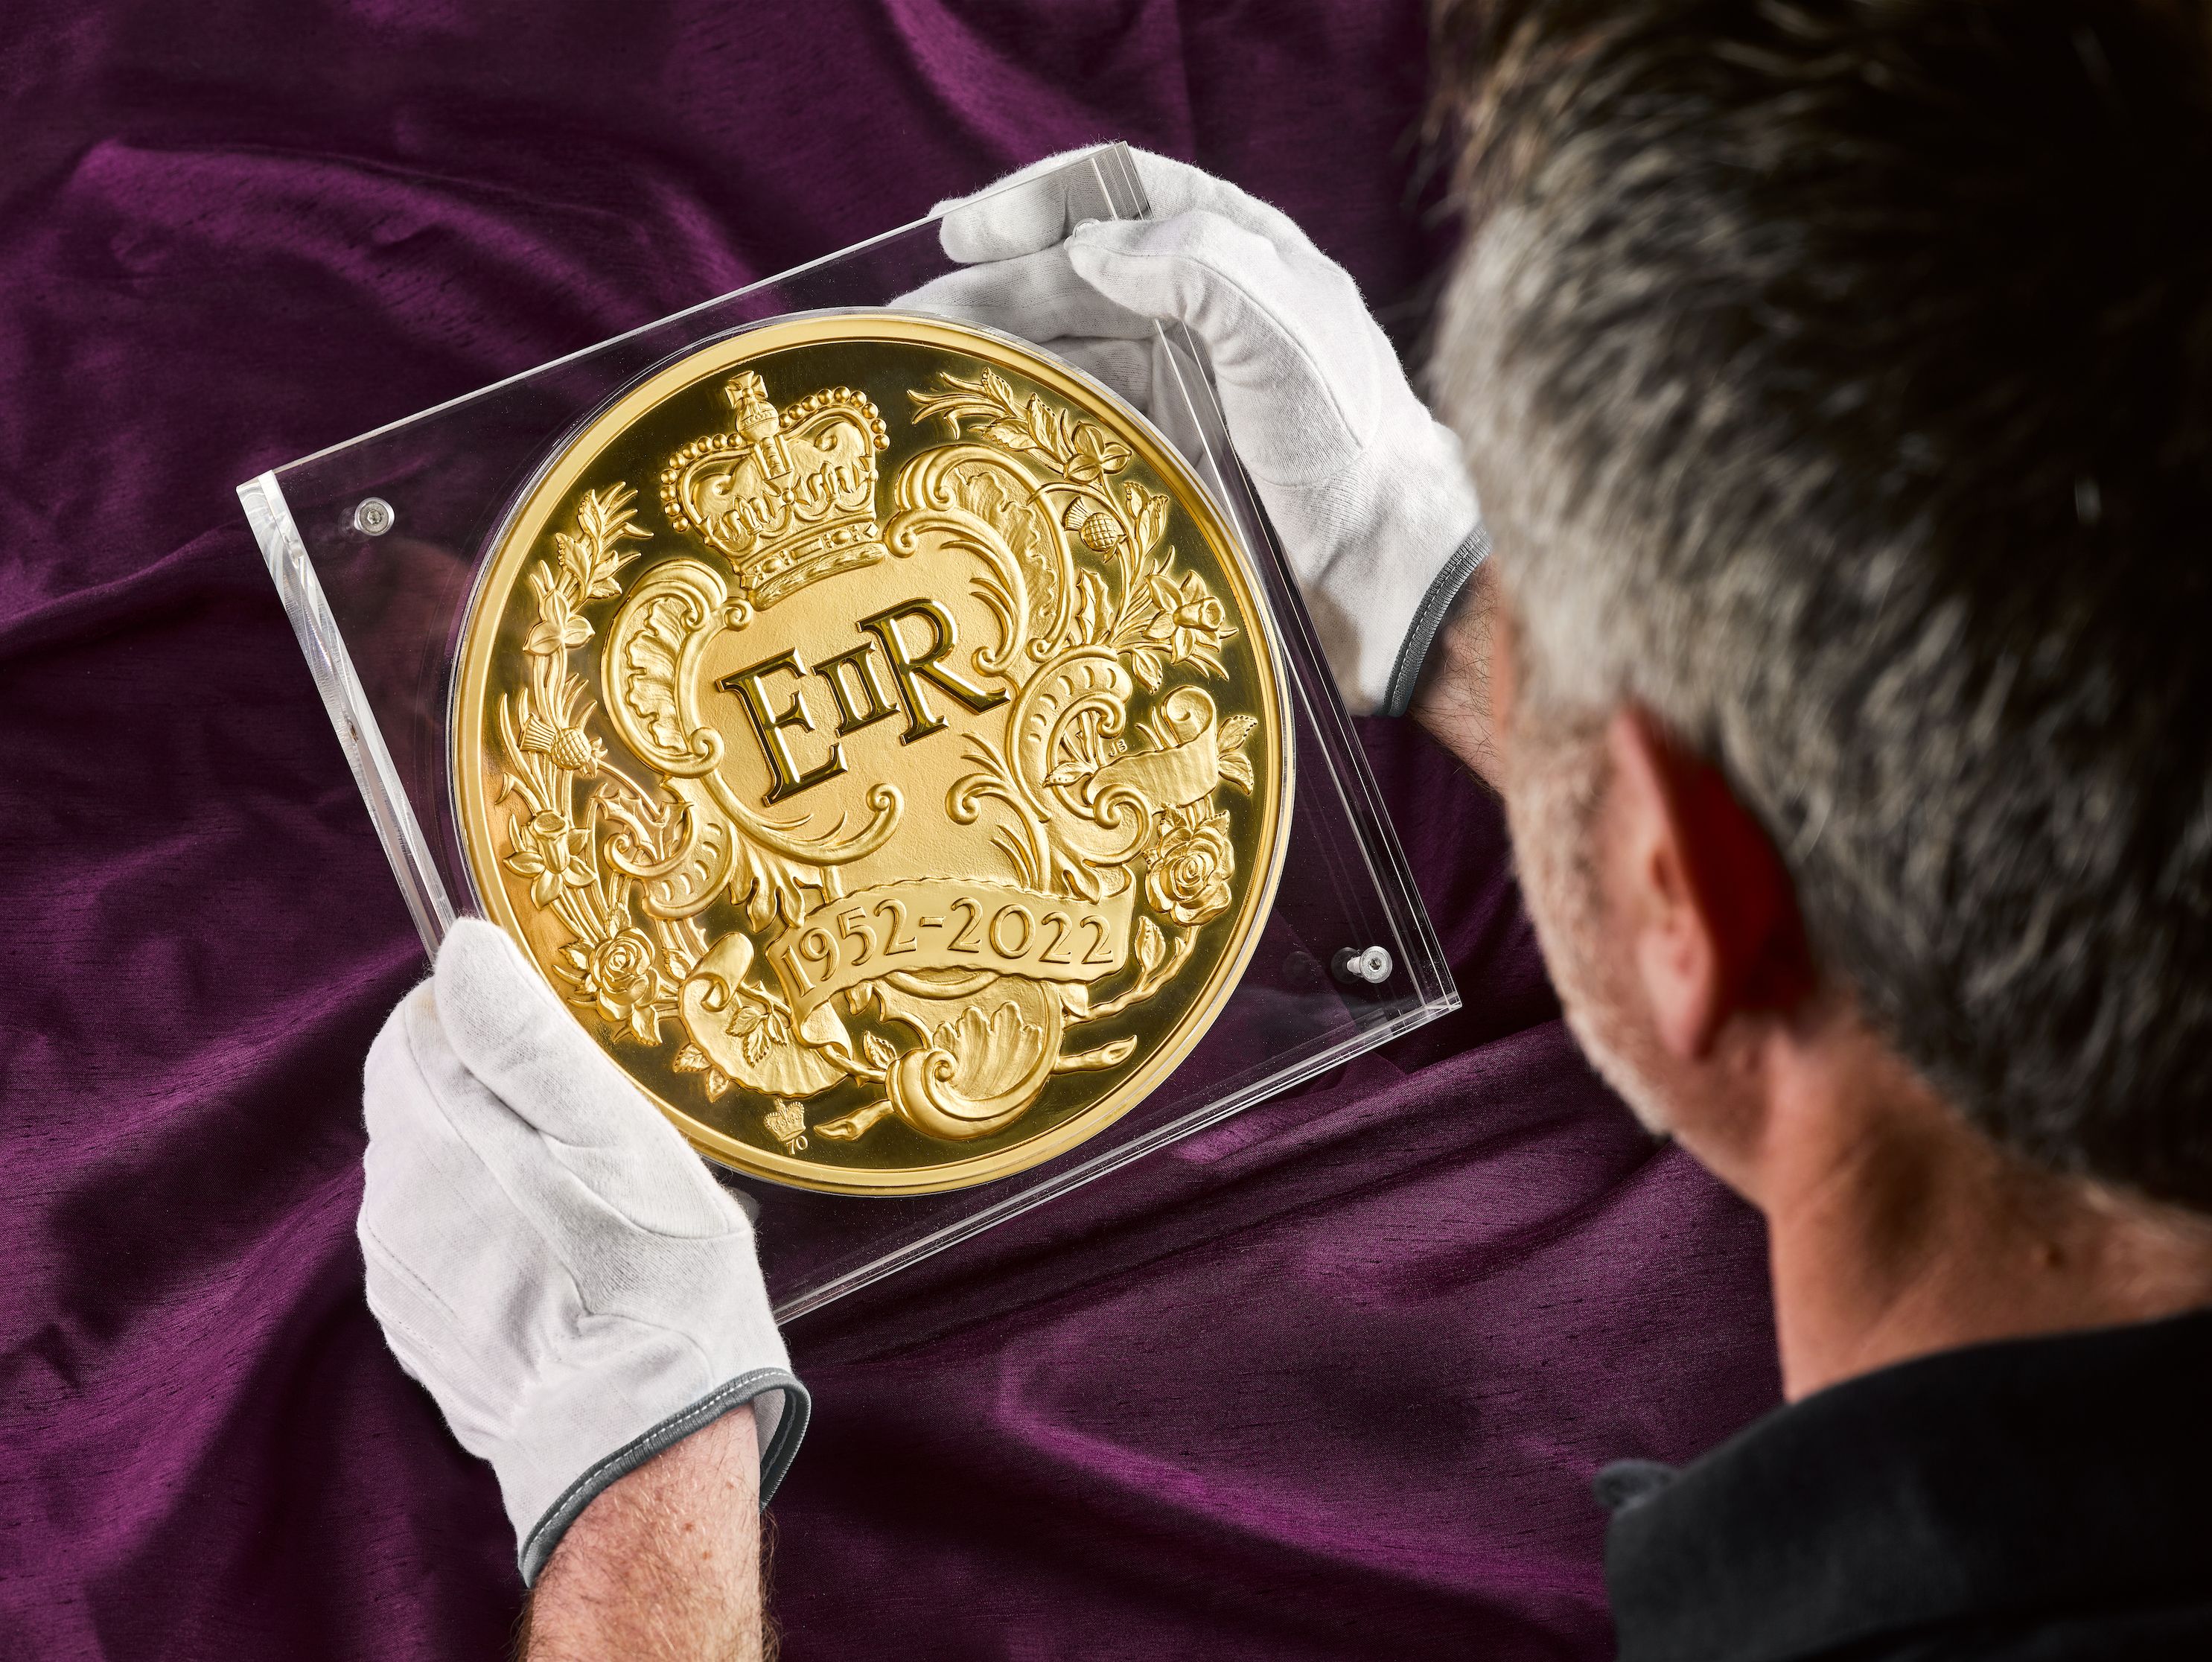 Queen Elizabeth Platinum Jubilee Commemorative Coin Set Collectors Gift Souvenir 